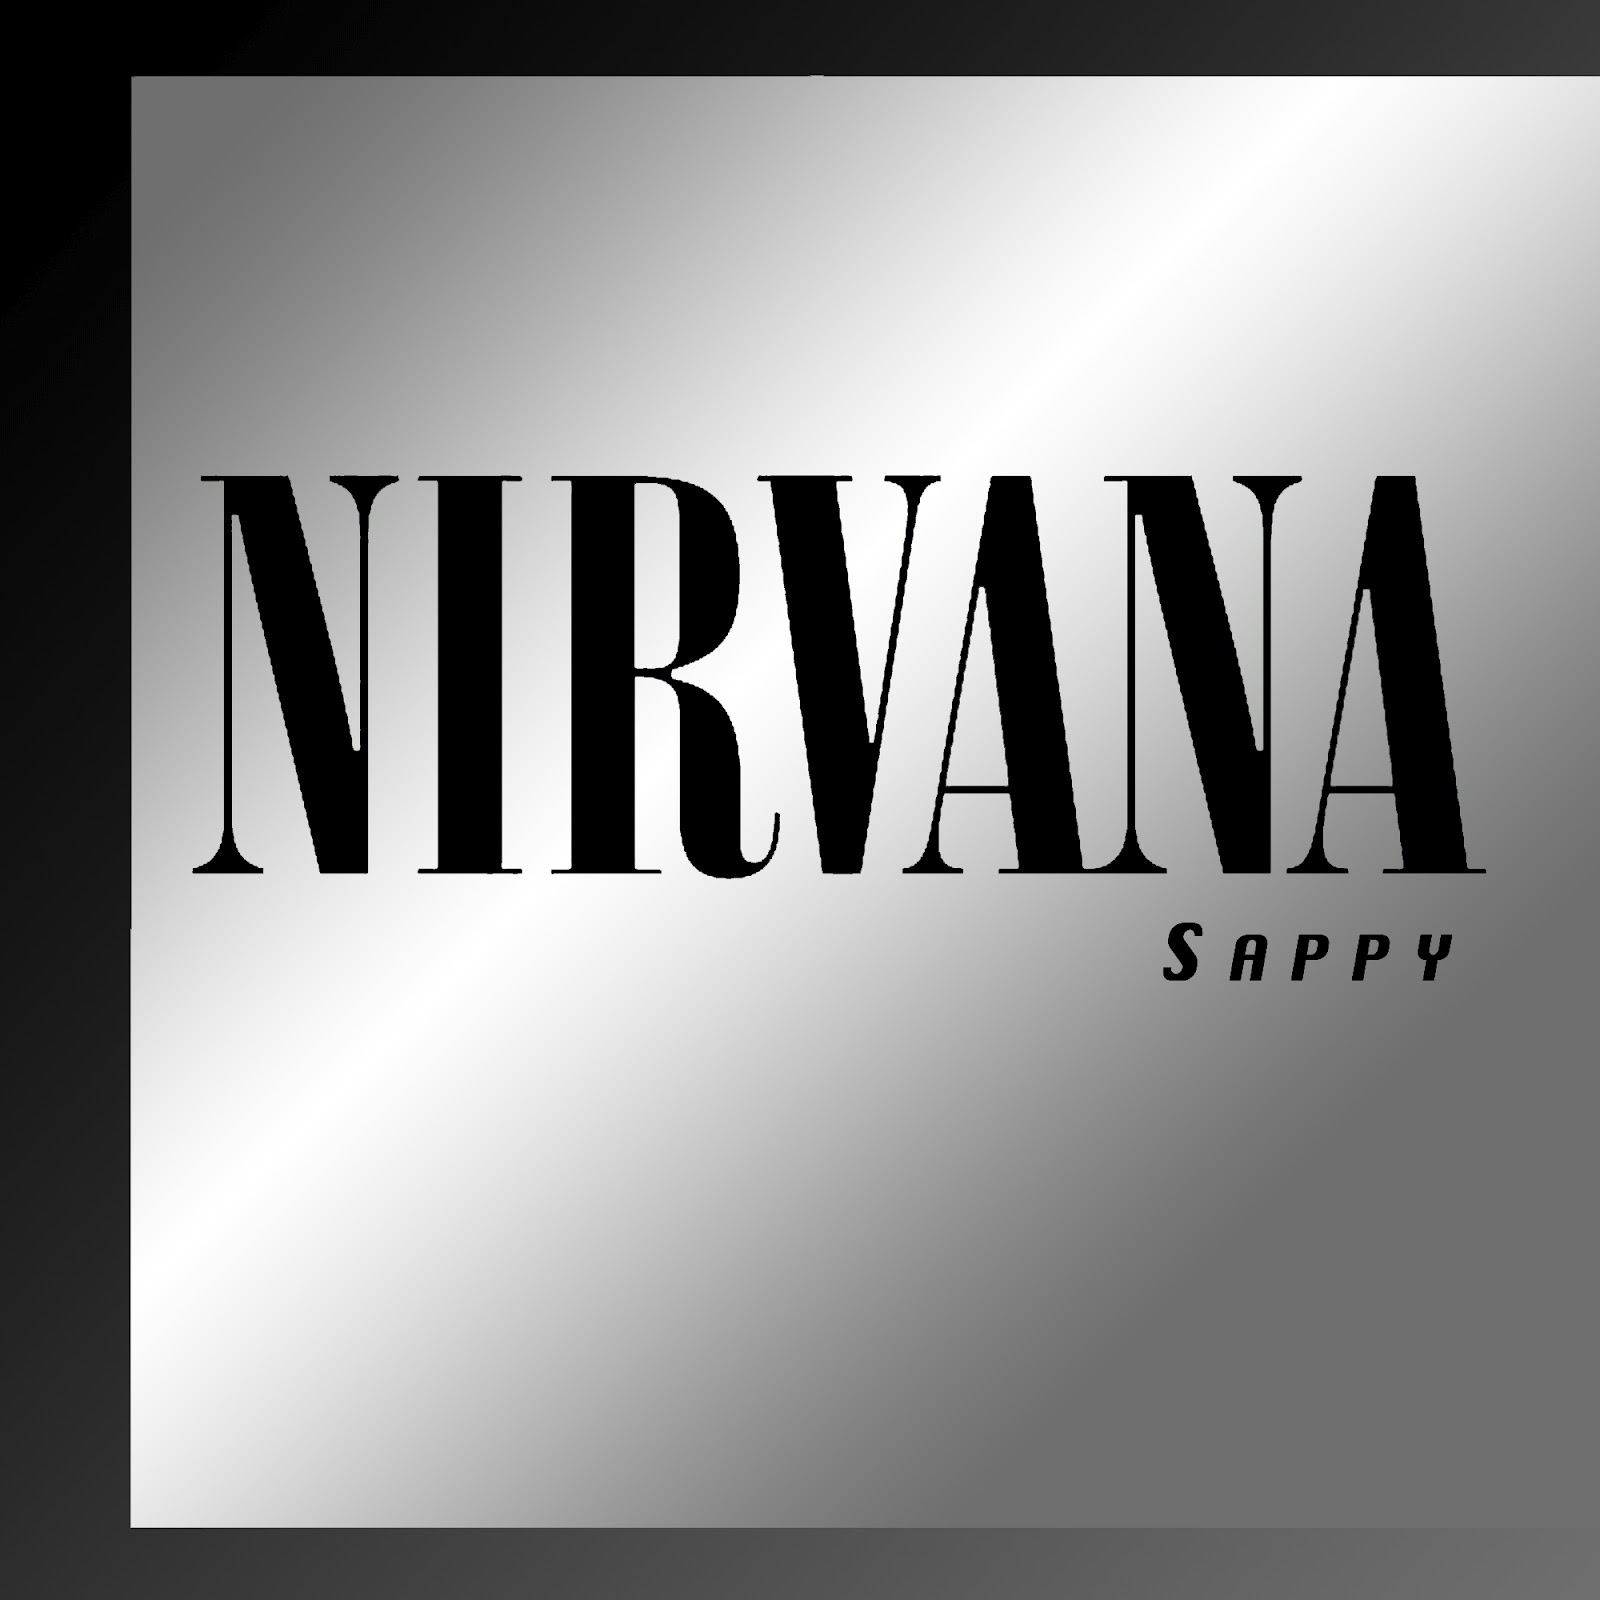 Nirvana sappy. Нирвана. Нирвана sappy. Nirvana-sappy обложка. Sappy обложка альбома Nirvana.